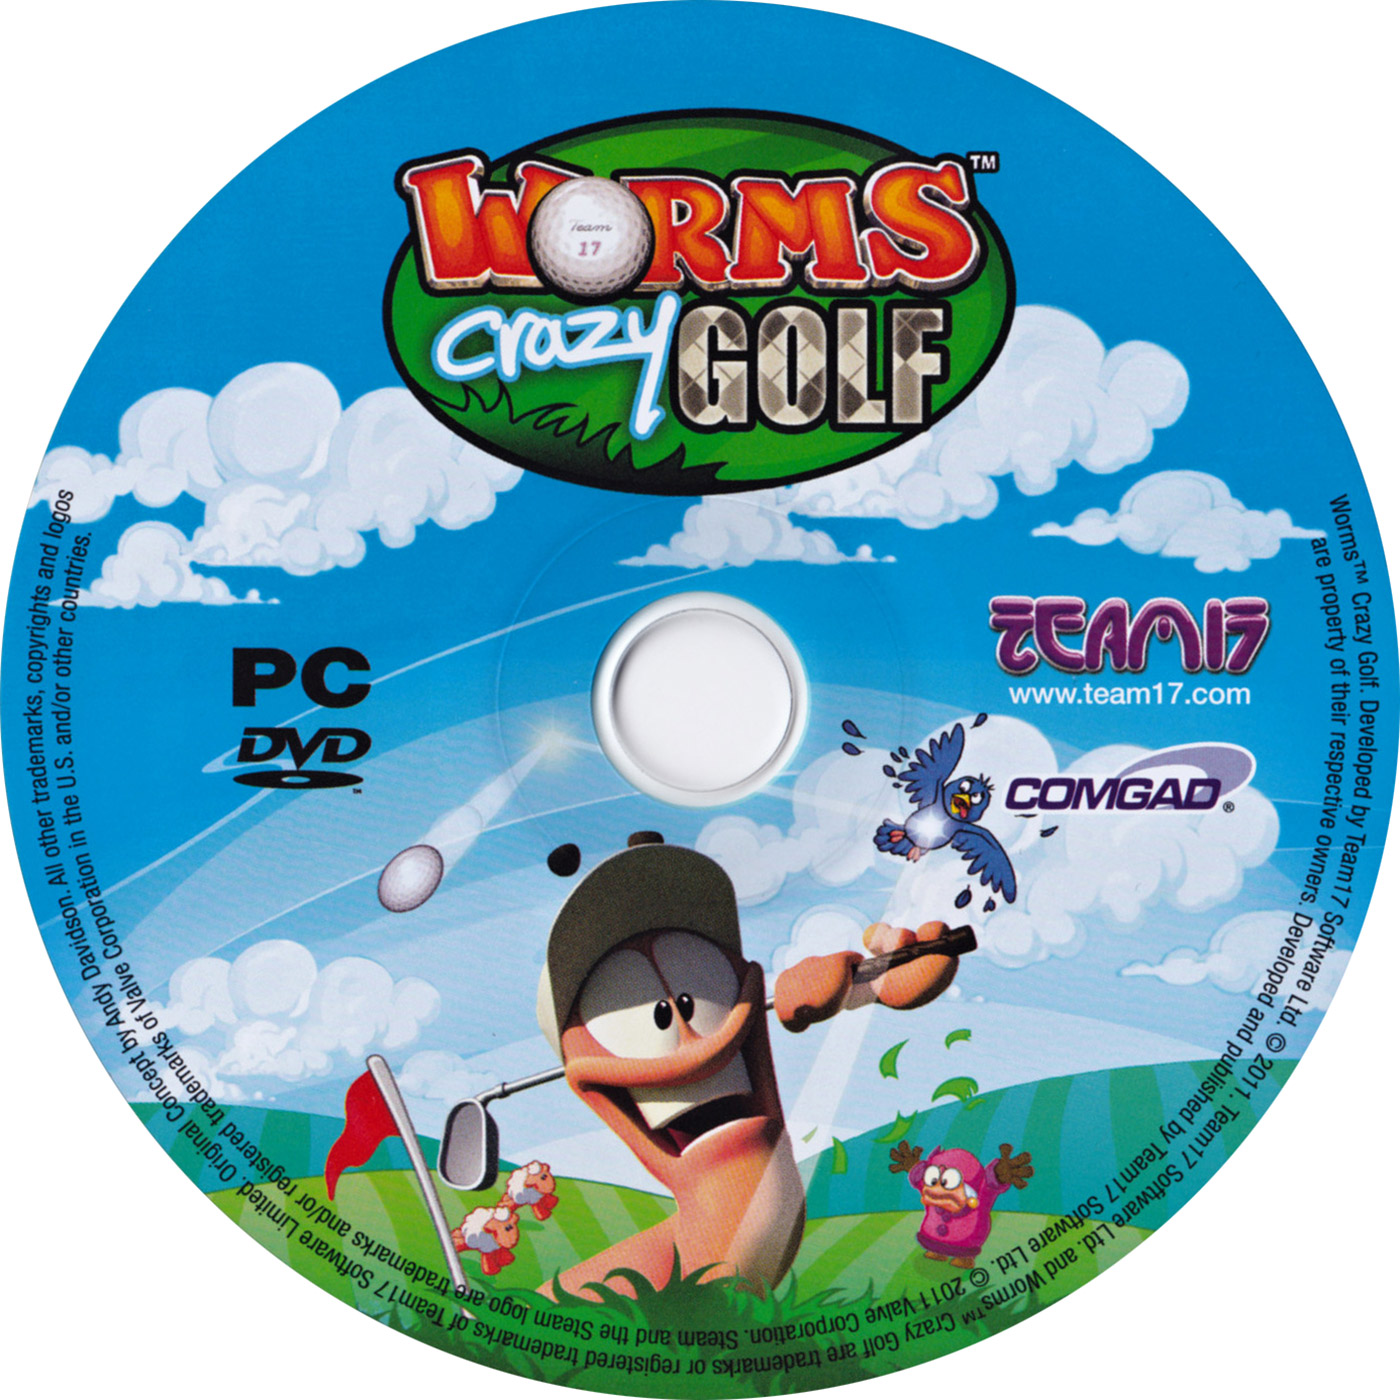 Worms Crazy Golf - CD obal